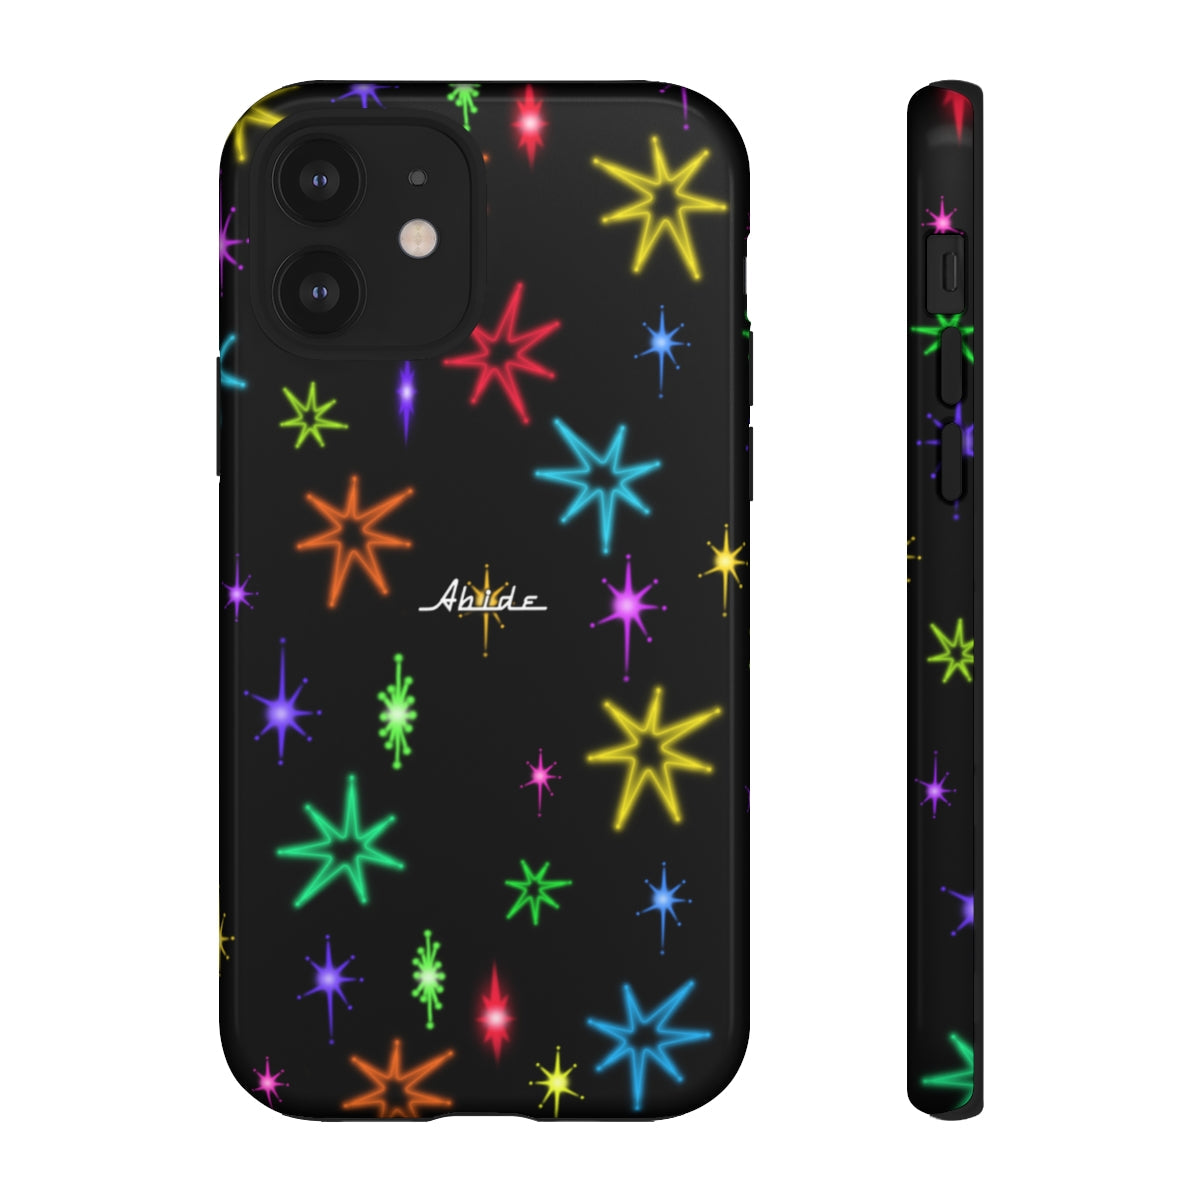 Lebowski's Neon Stars | Smart Phone cover Tough Case